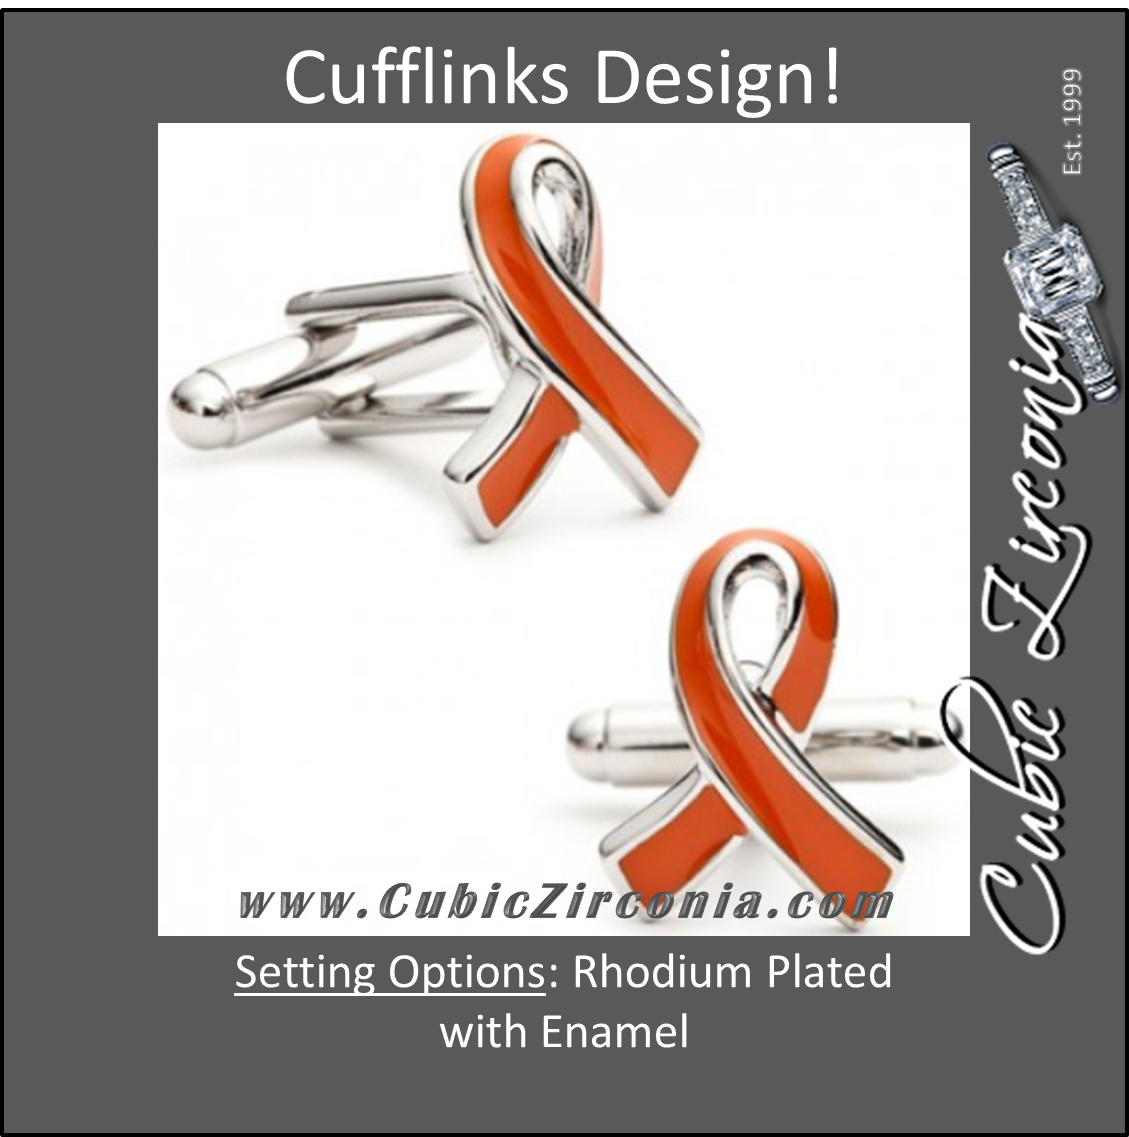 Men’s Cufflinks- Orange Enamel Ribbon Leukemia Awareness (100% Proceeds Donated)